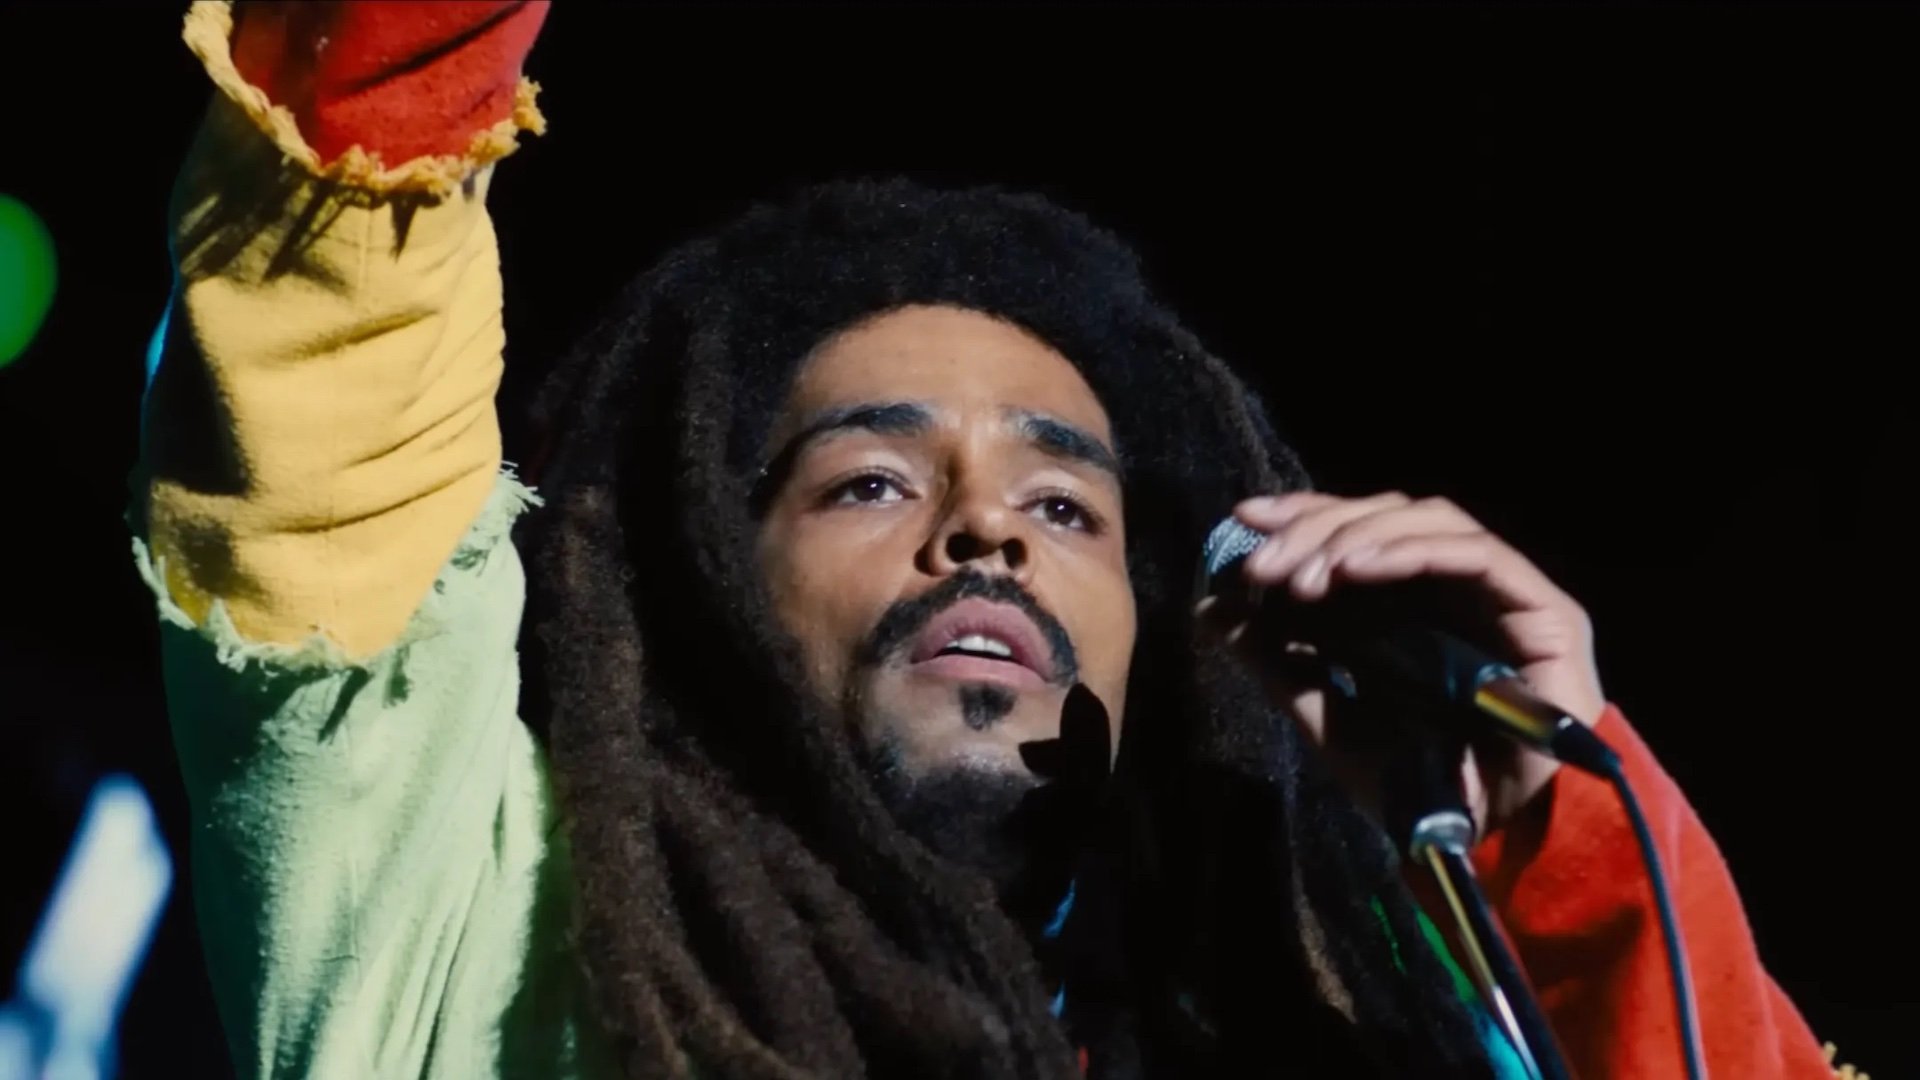 Bob Marley (Kingsley Ben-Adir) singing on stage in 'Bob Marley: One Love'